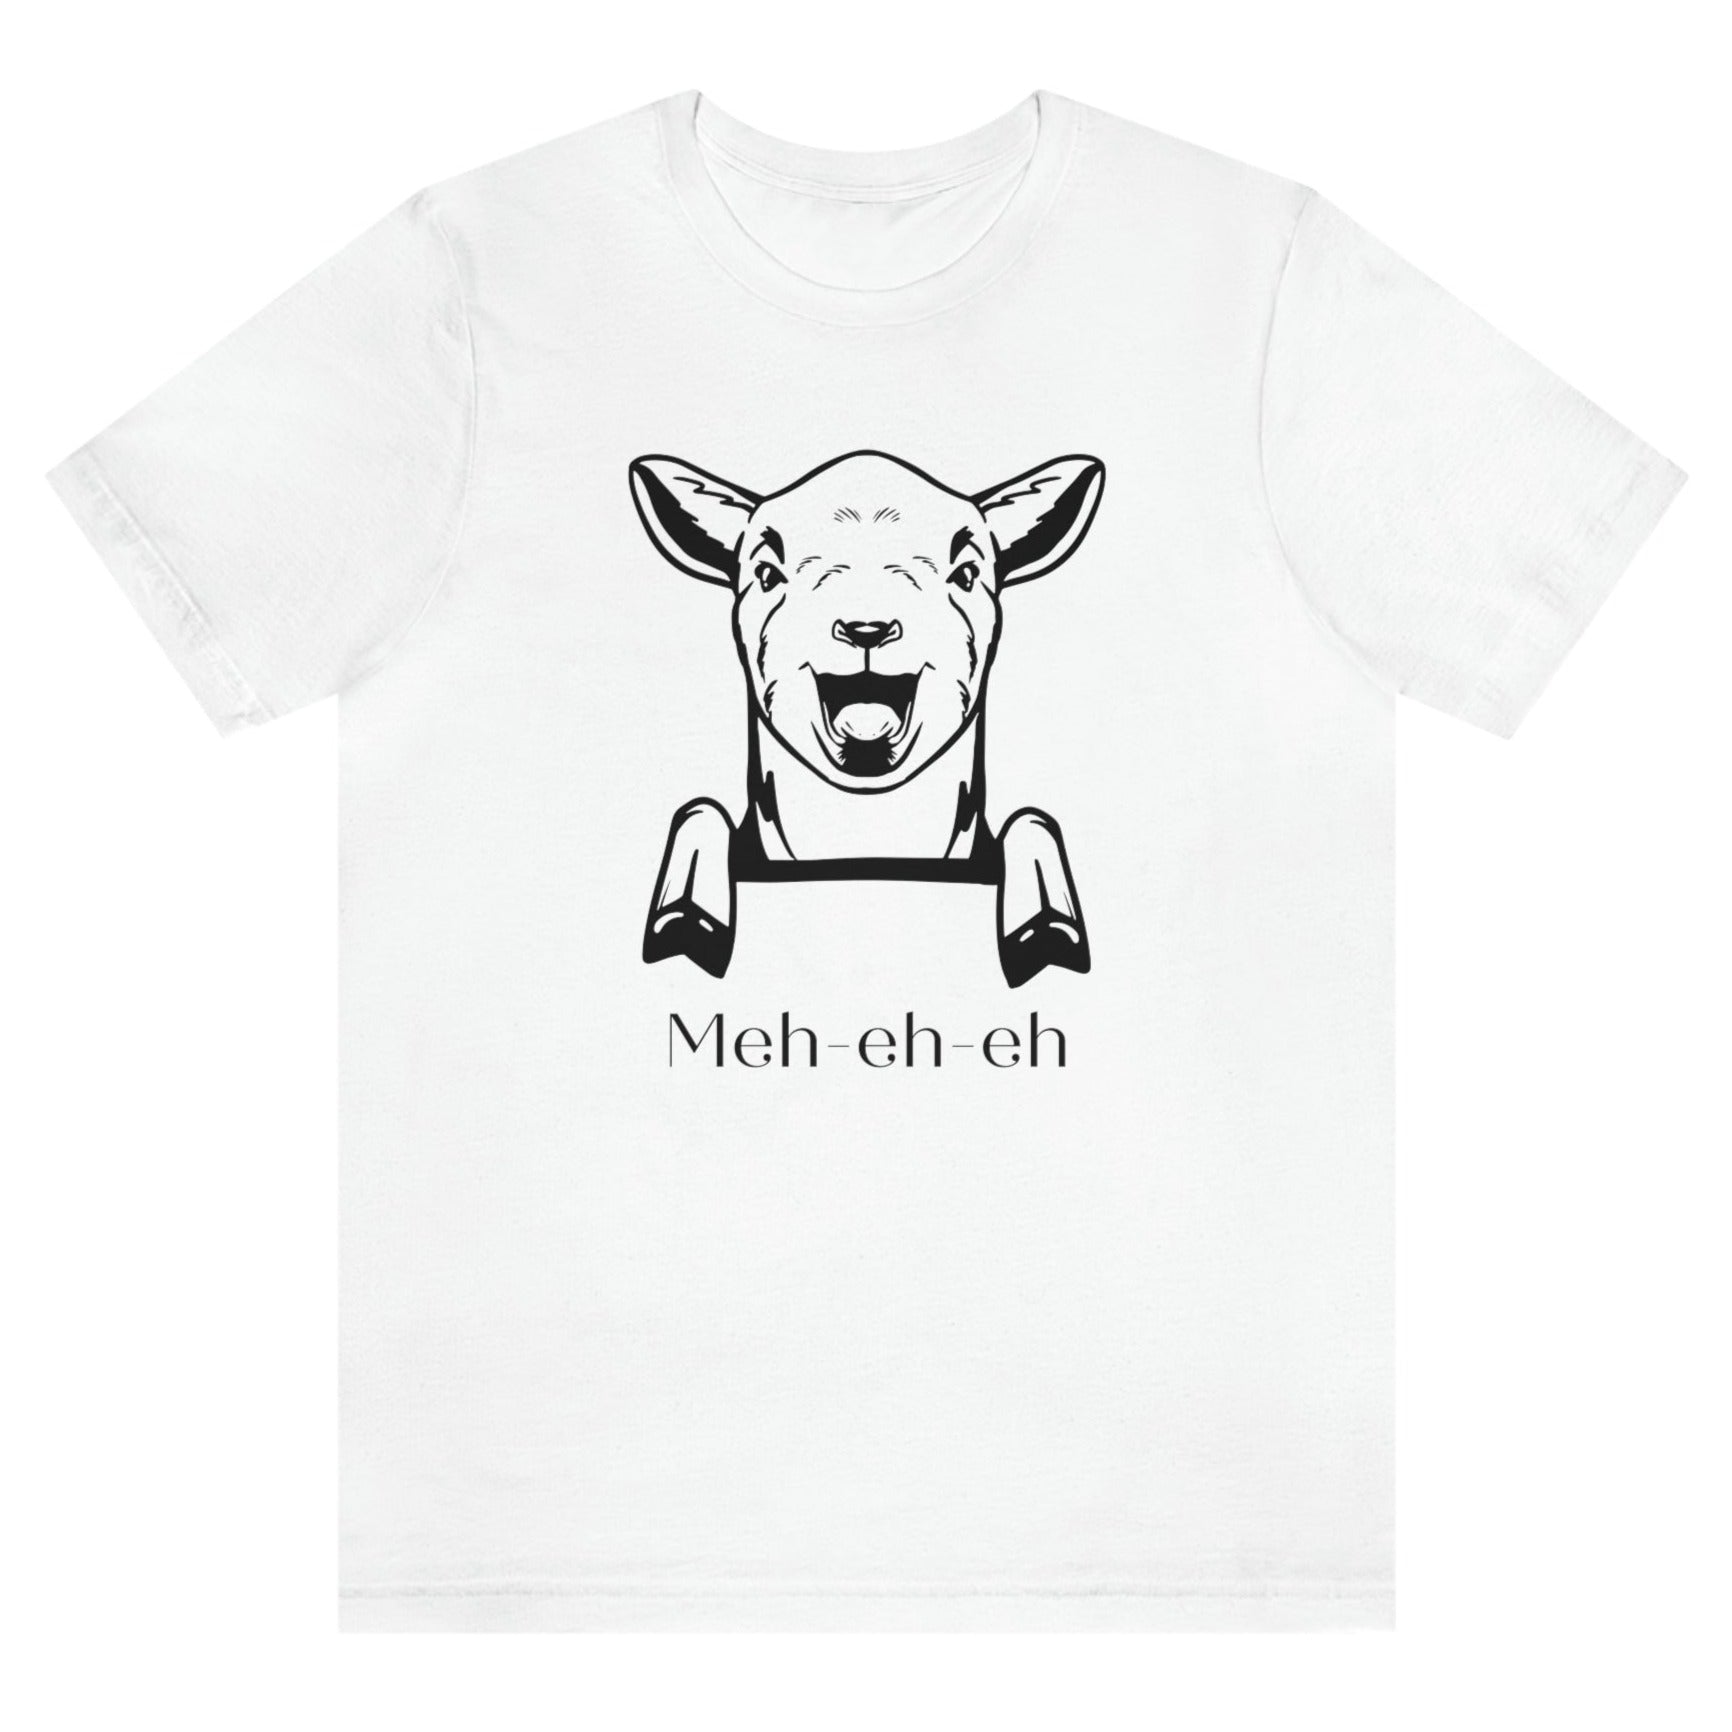 the-meh-eh-eh-sheep-white-t-shirt-womens